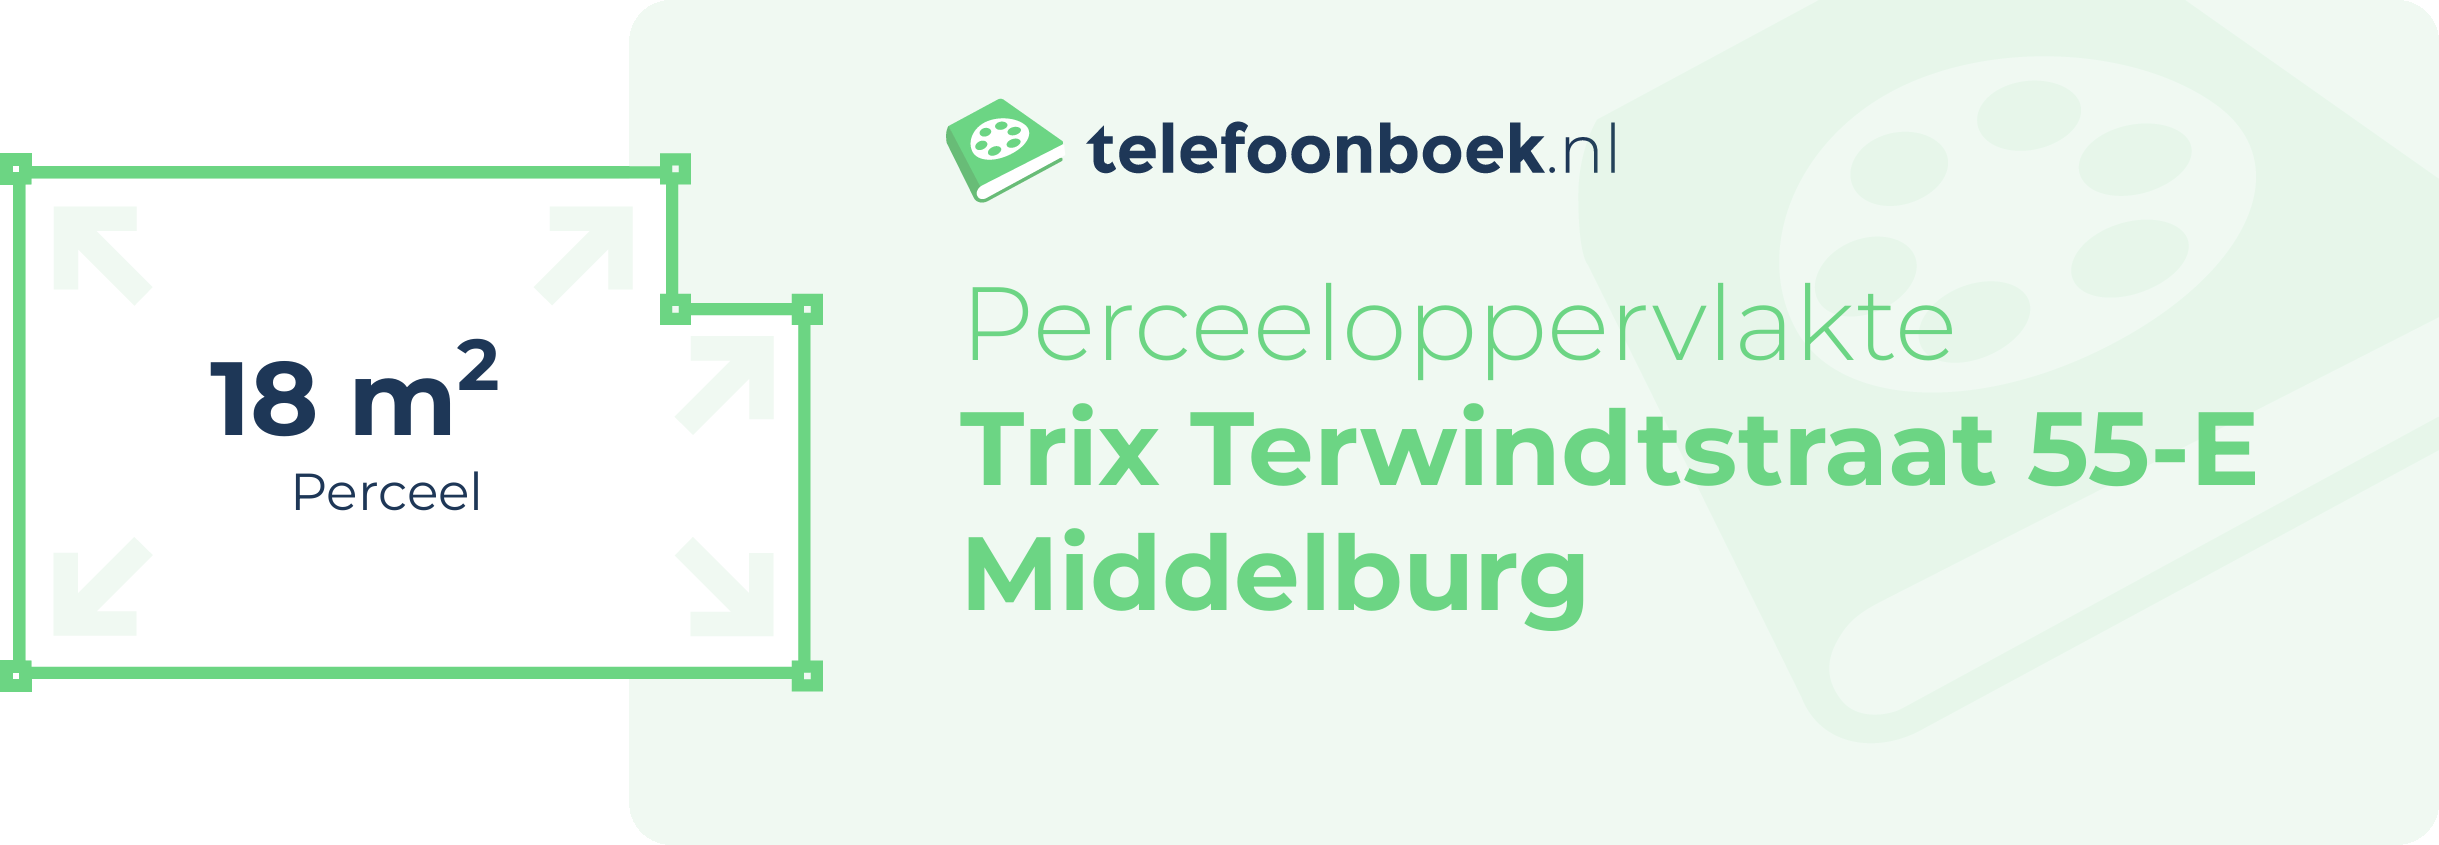 Perceeloppervlakte Trix Terwindtstraat 55-E Middelburg